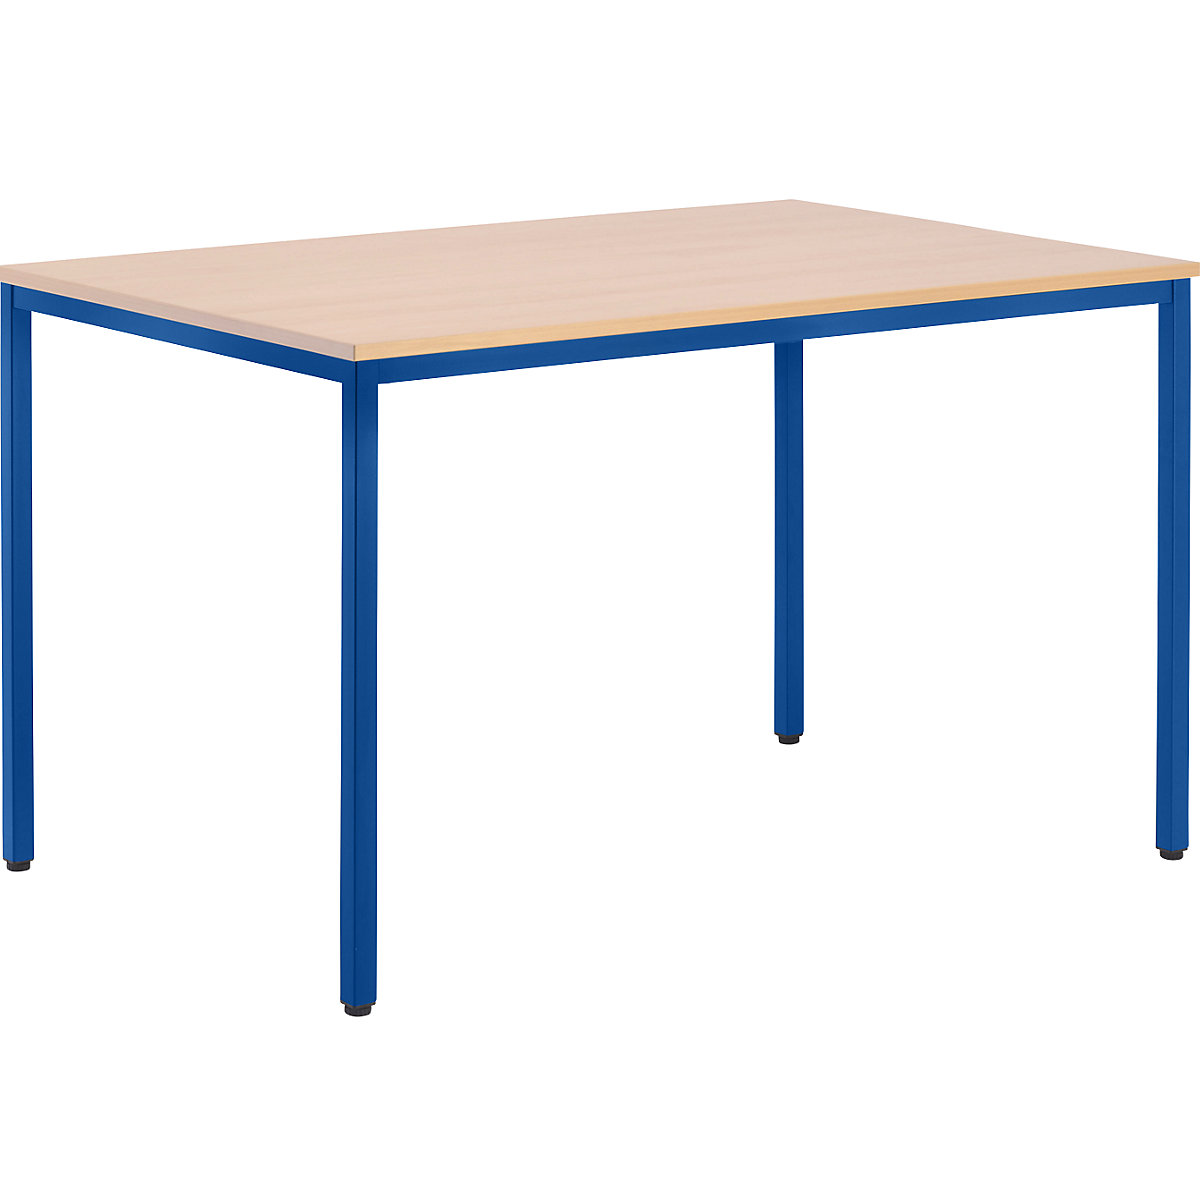 Višenamjenski stol – eurokraft basic, VxŠxD 720 x 1200 x 800 mm, ploča u imitaciji bukve, postolje u encijan plavoj boji-3